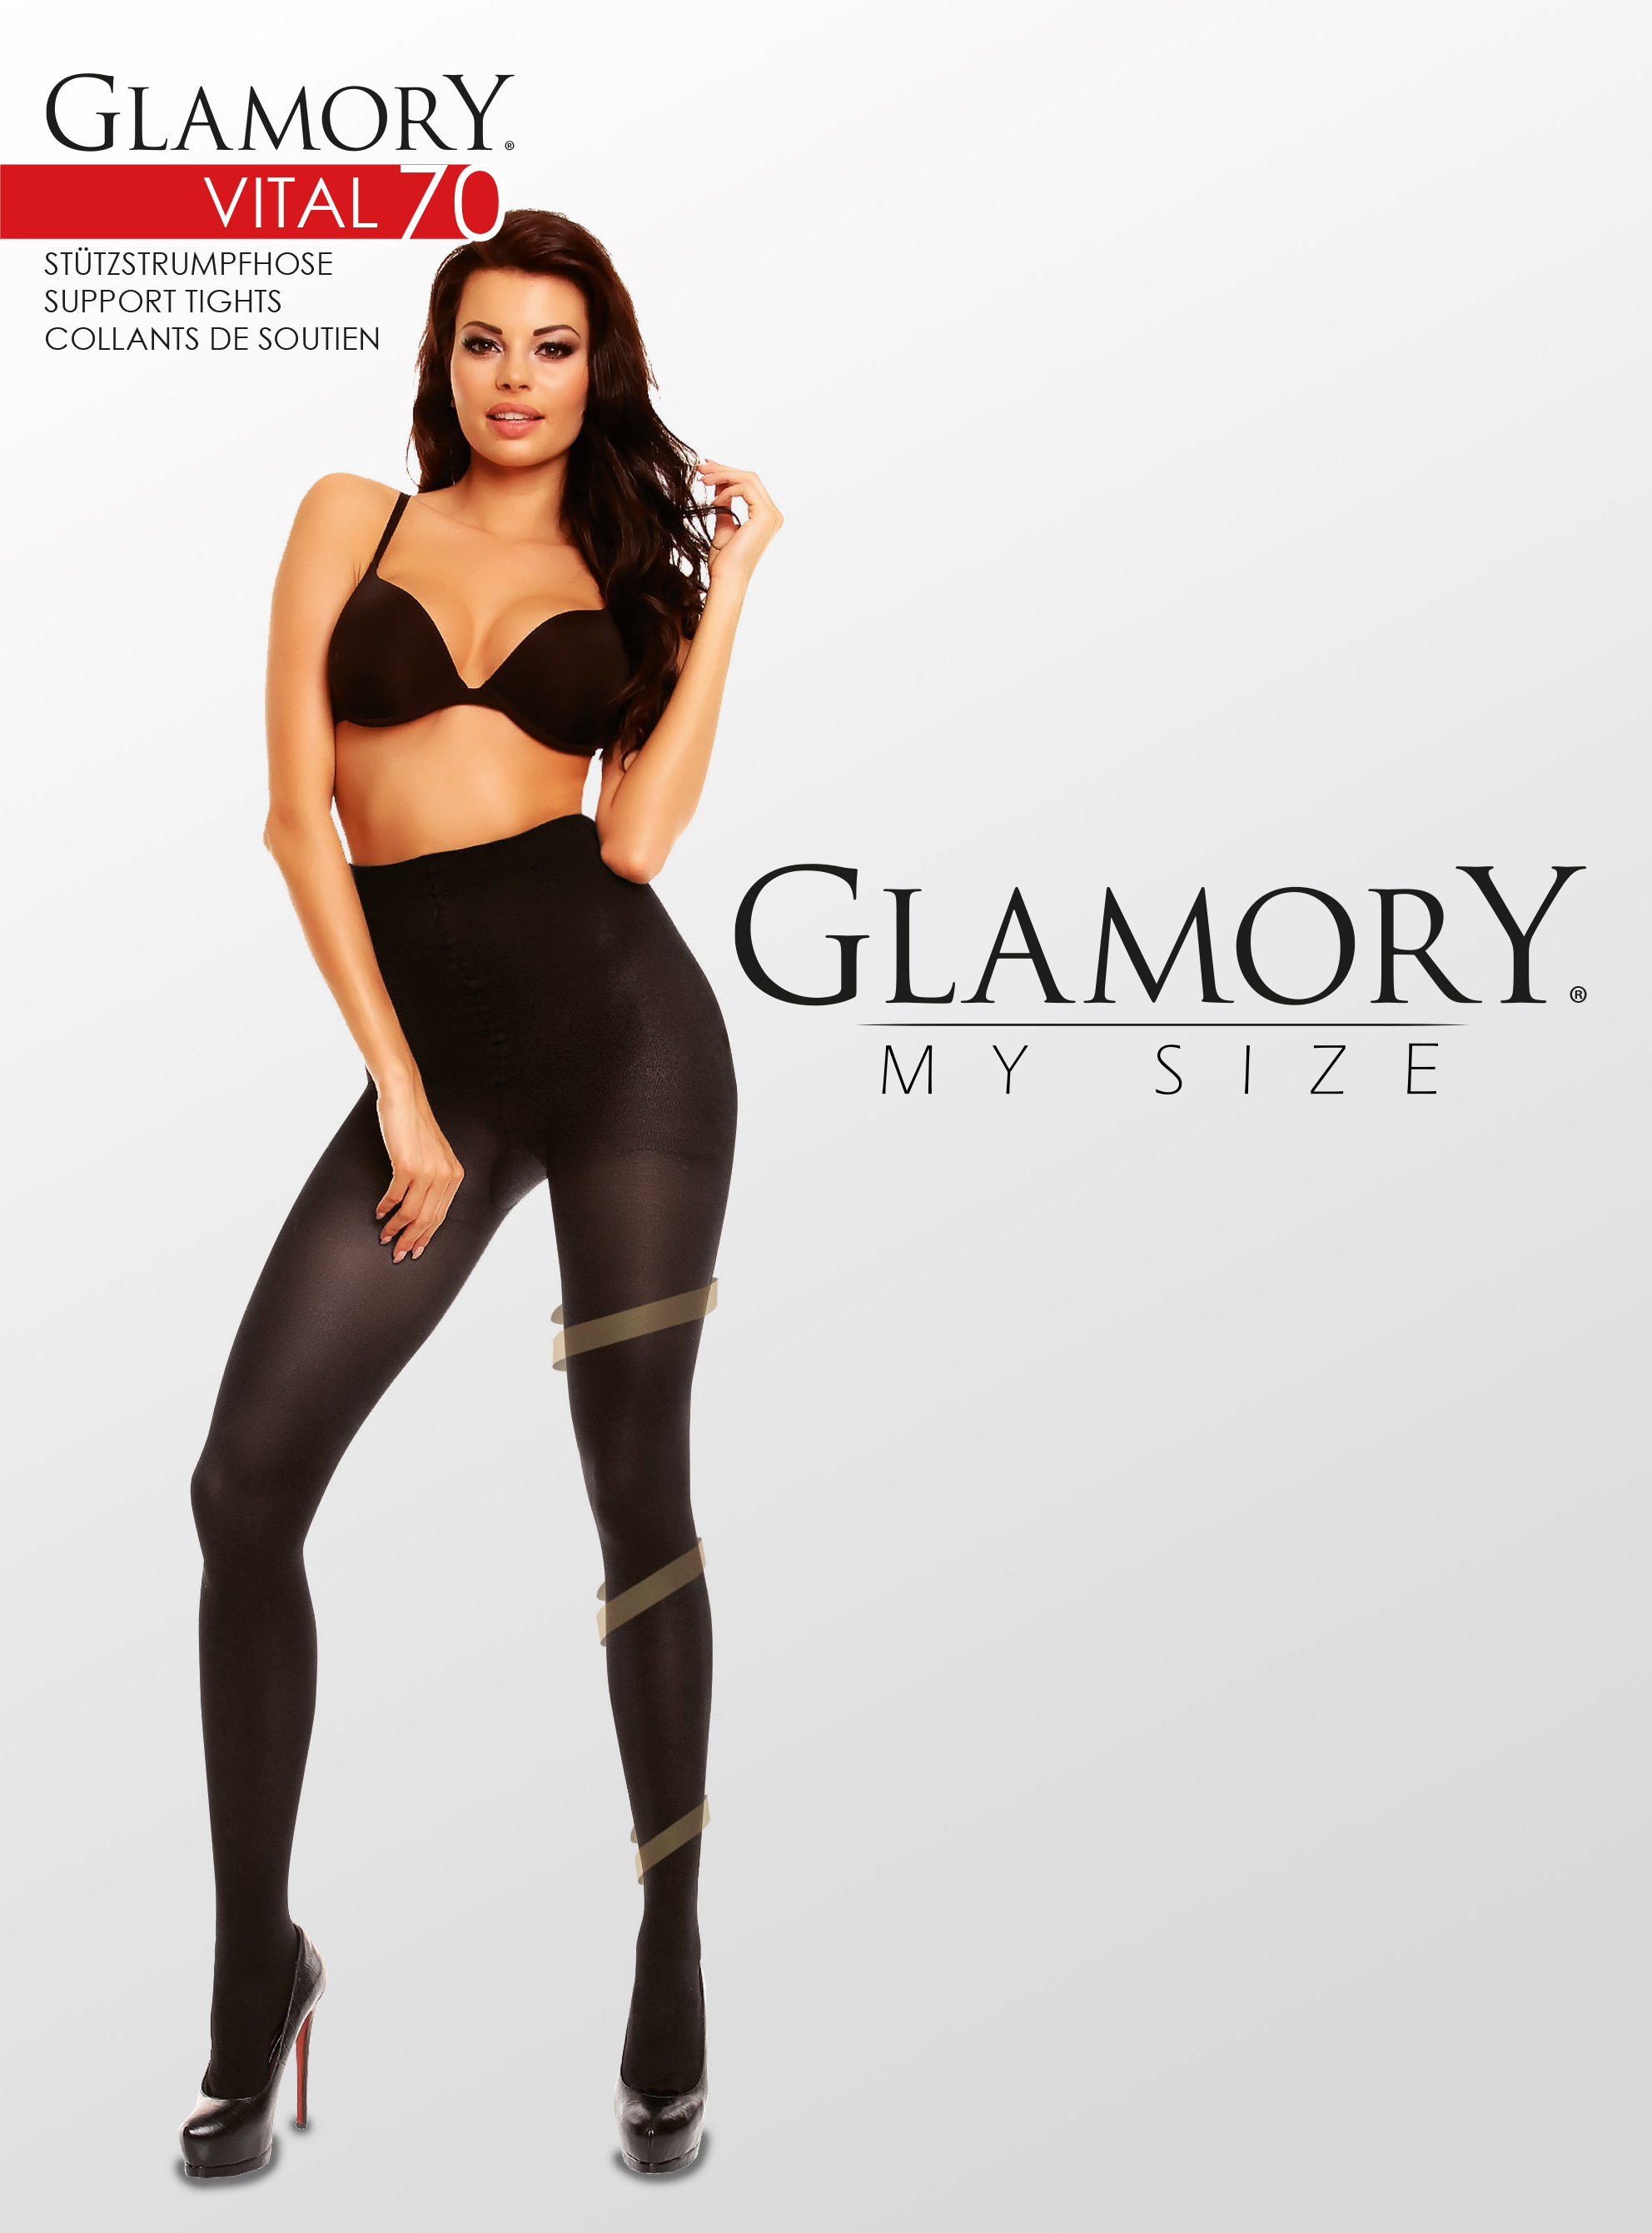 Glamory Vital 70 Stützstrumpfhose (3er Pack)